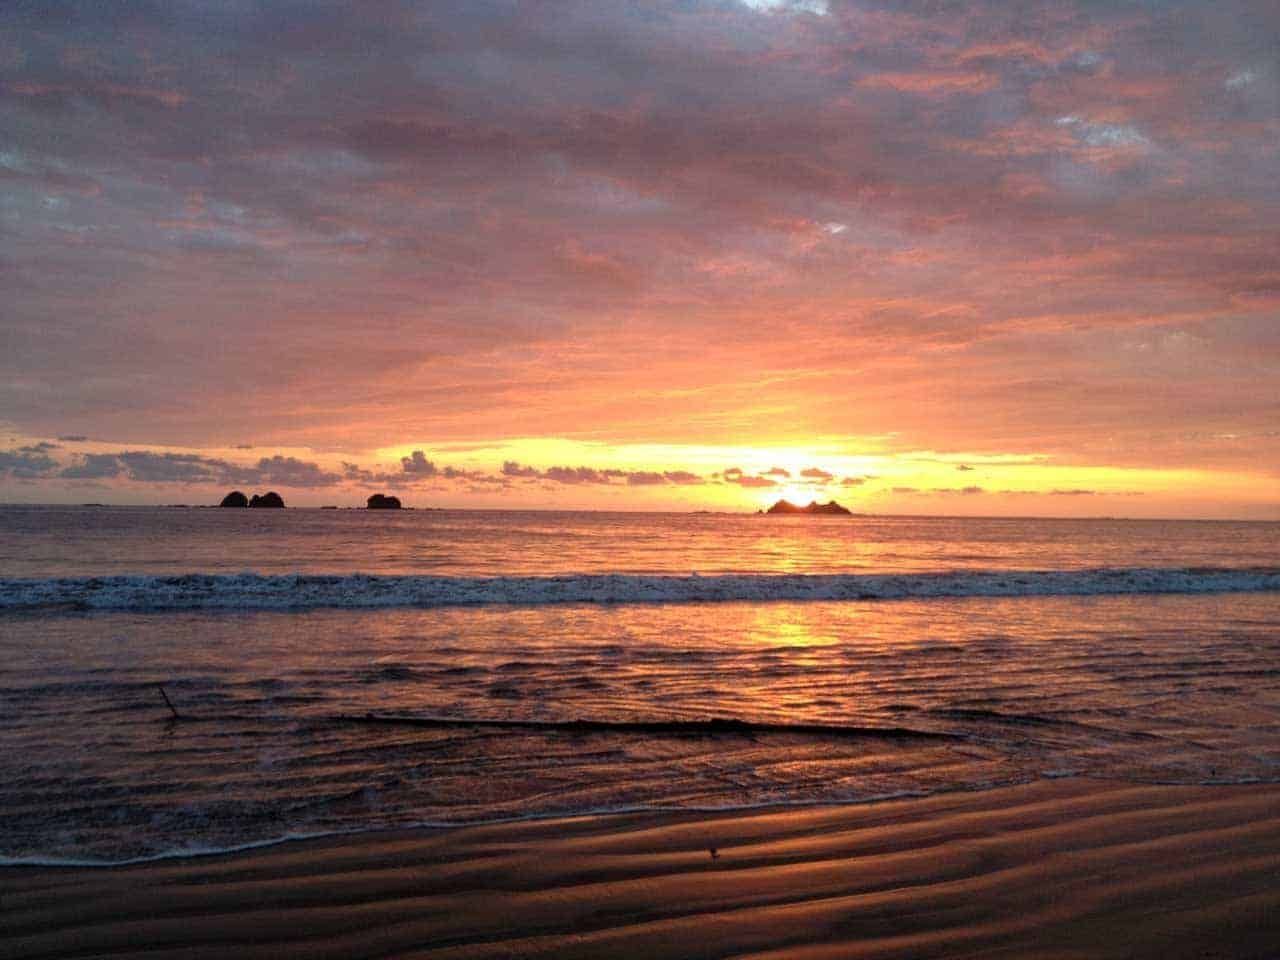 Sunset over the Three Sisters islands near Uvita, Costa Rica